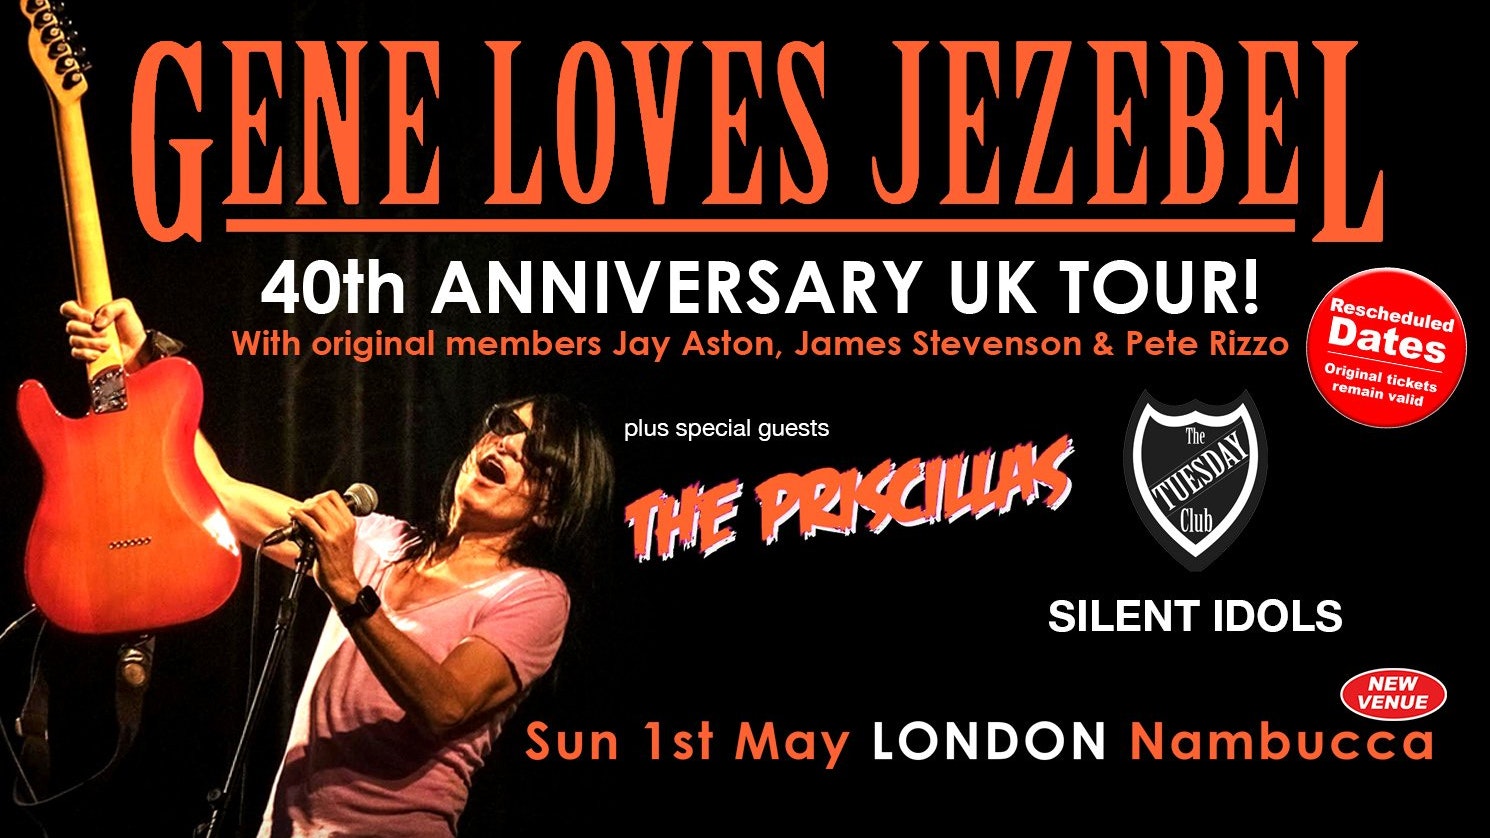 Gene Loves Jezebel + The Priscillas + The Tuesday Club & Silent Idols